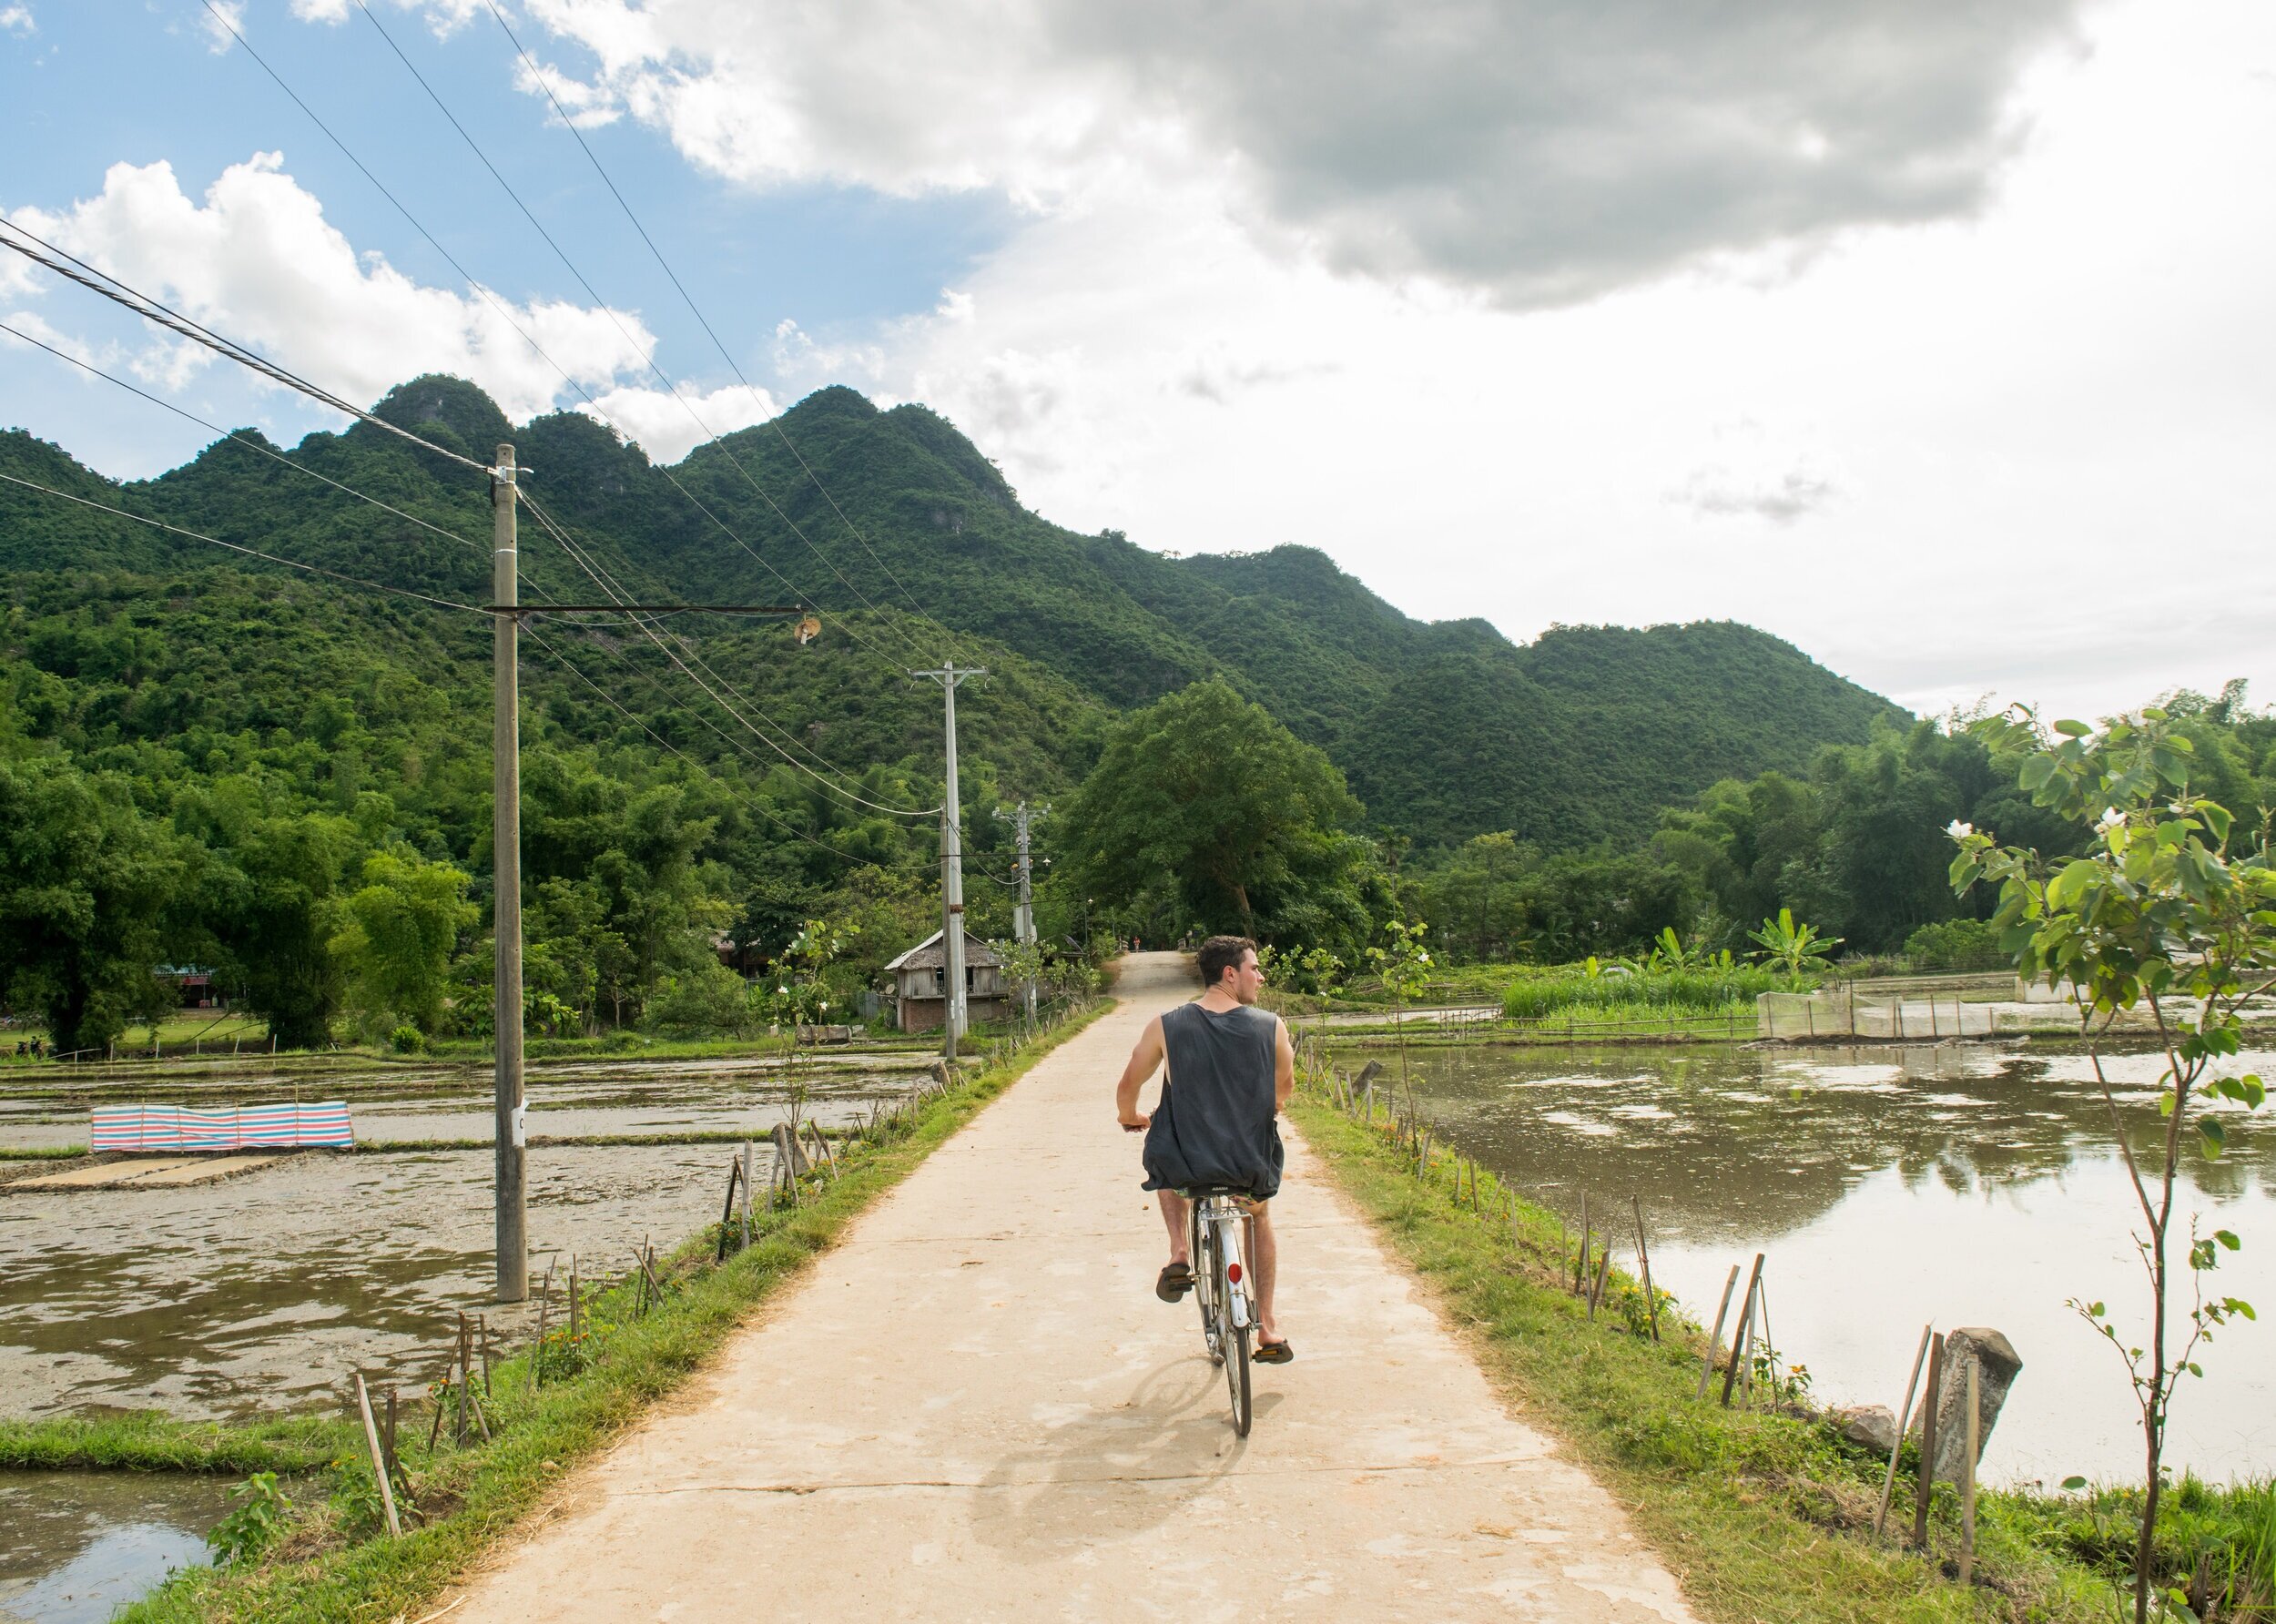 Riding bikes through the rice fields